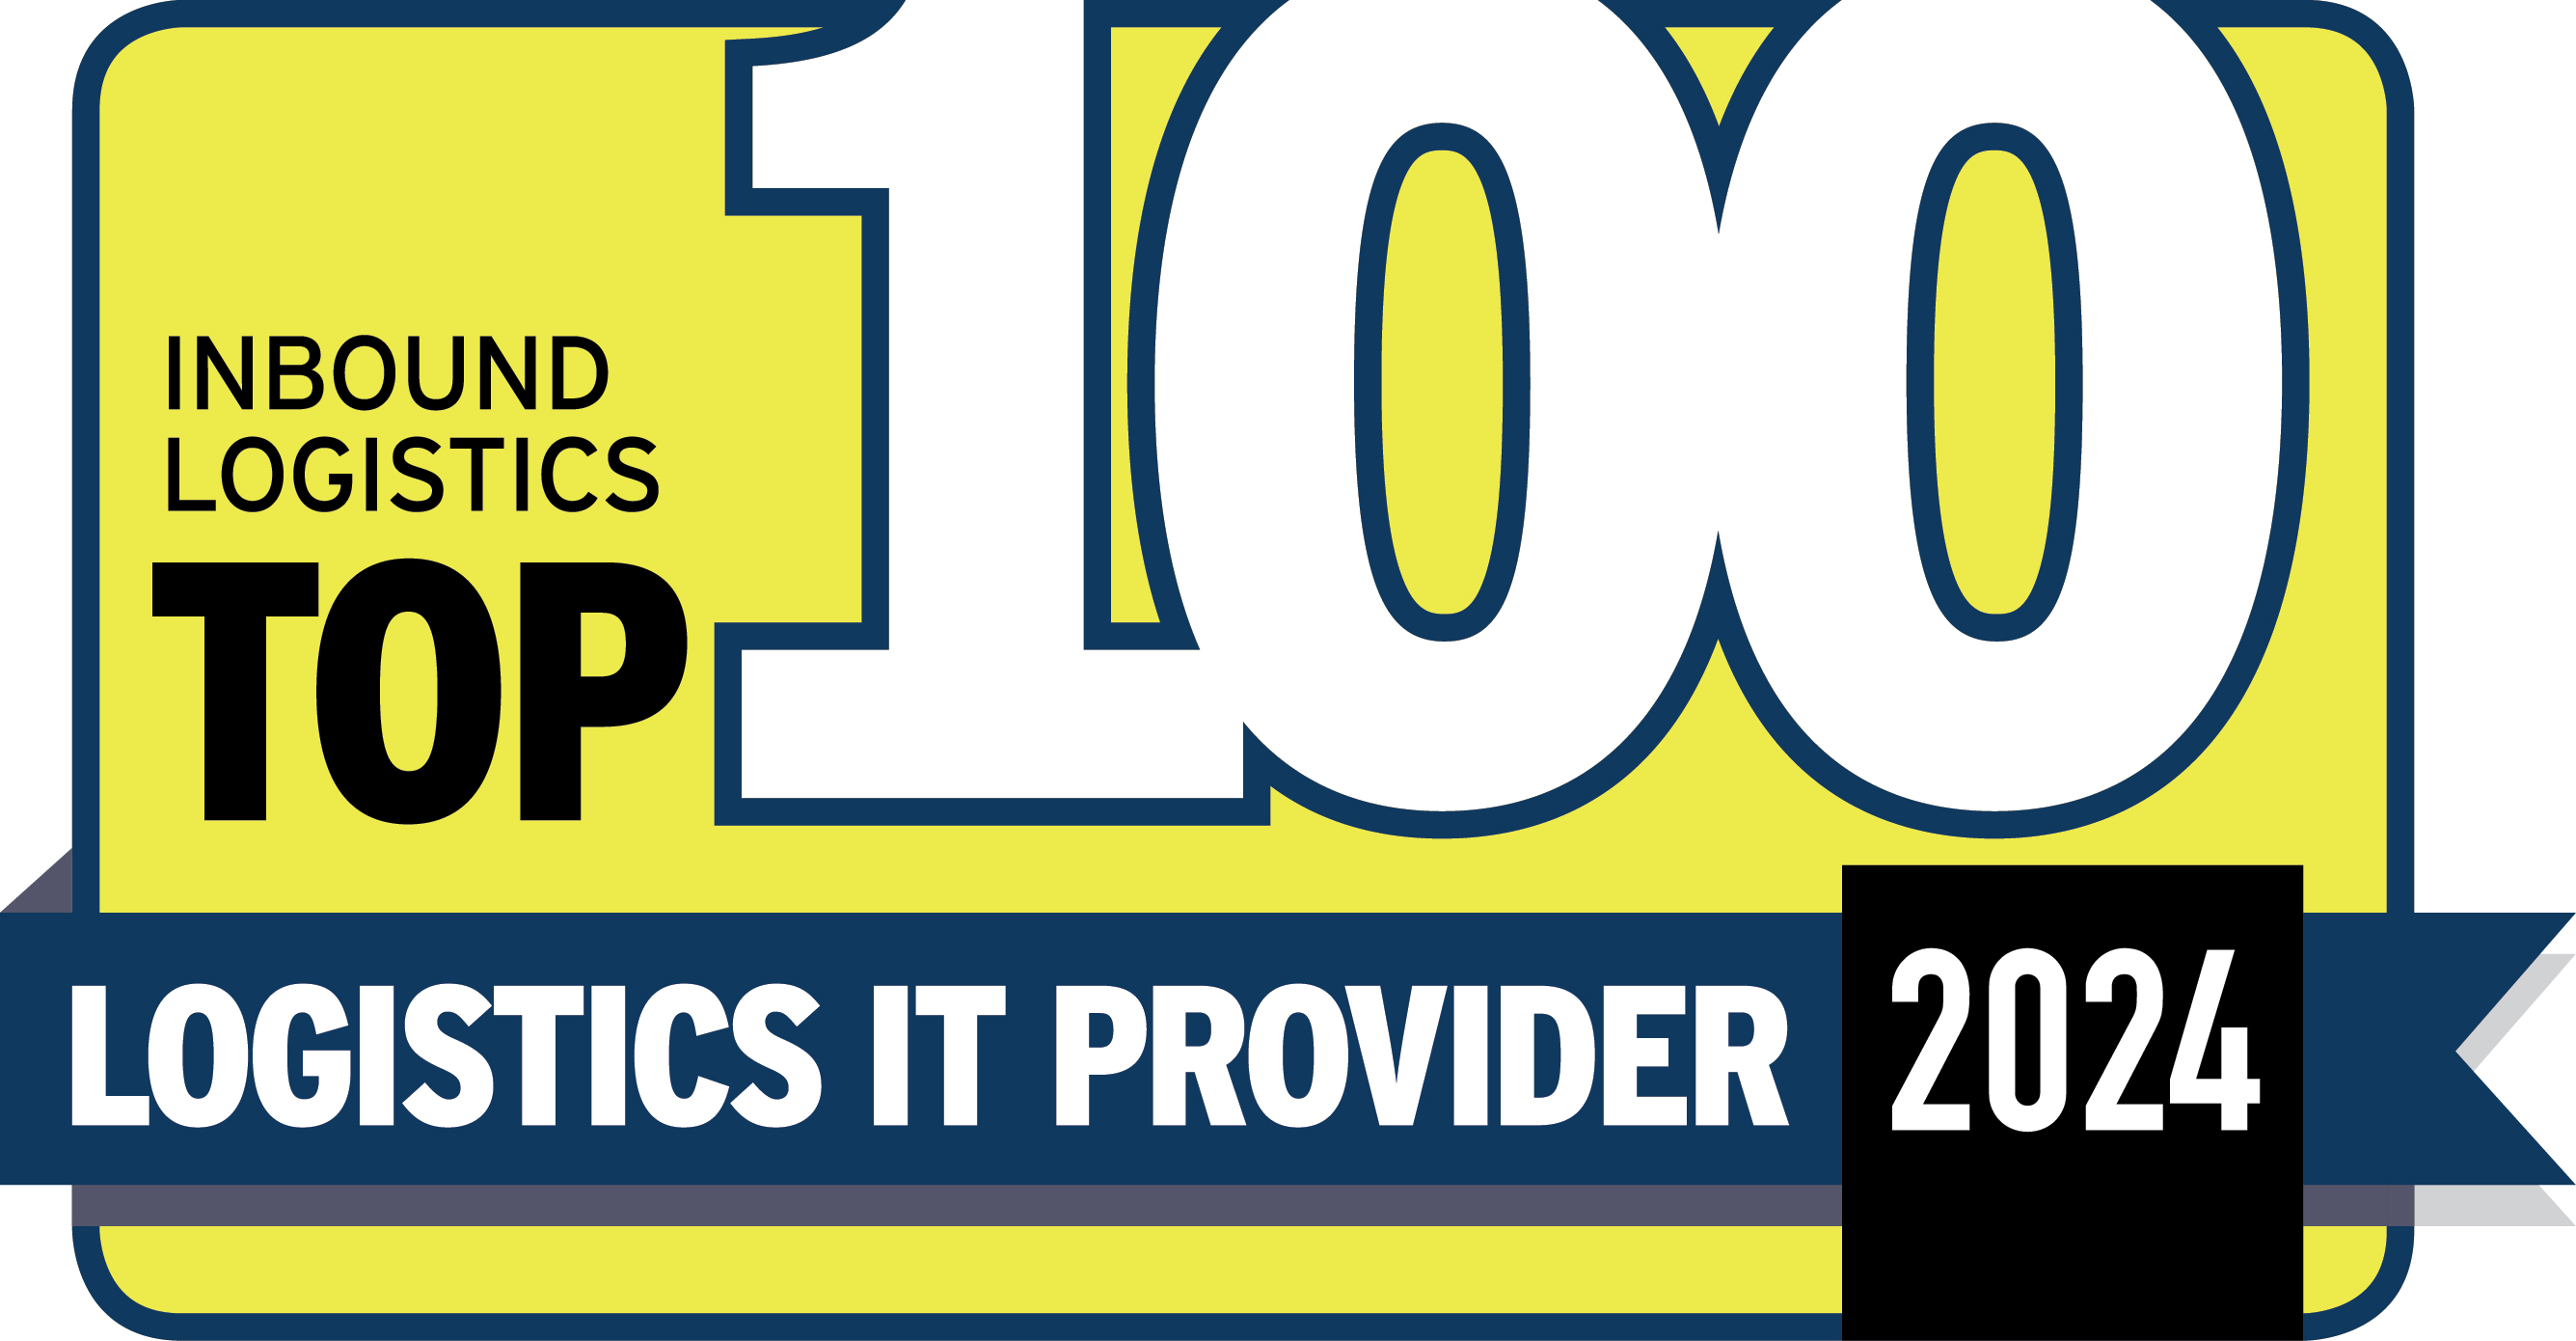 Inbound Logistics Top 100 Logistics IT Provider